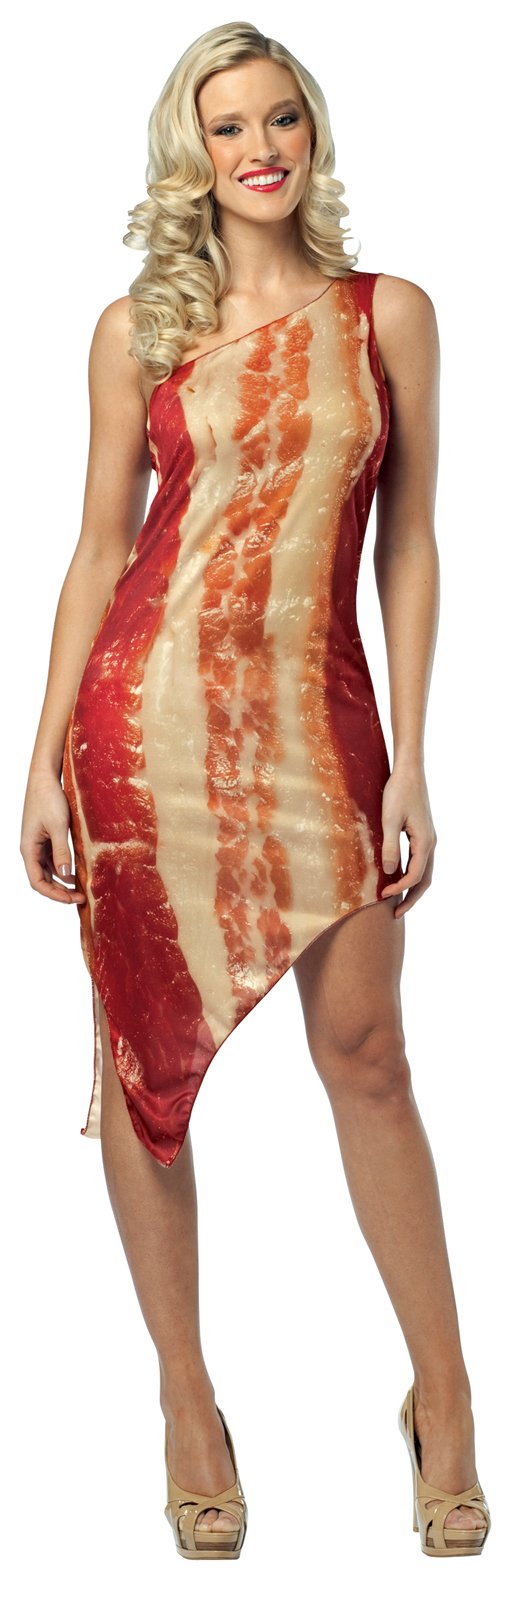 Bacon Dress Adult Costume